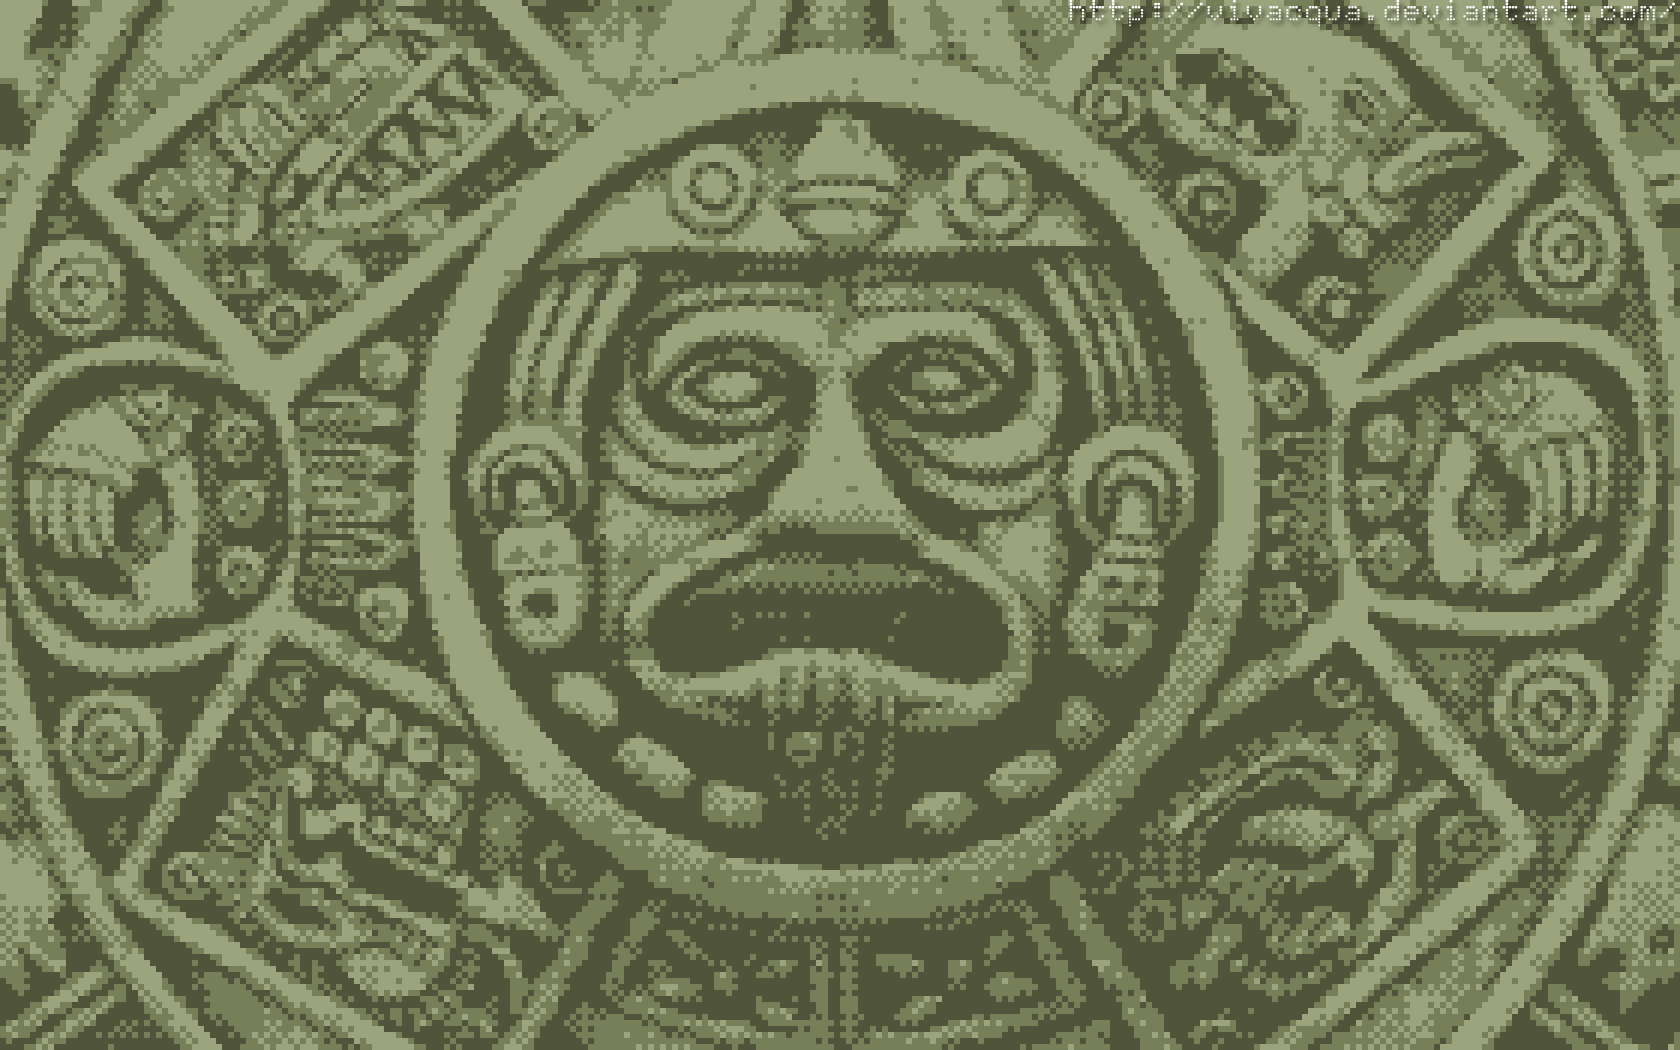 Aztec Calendar Gameboy Style